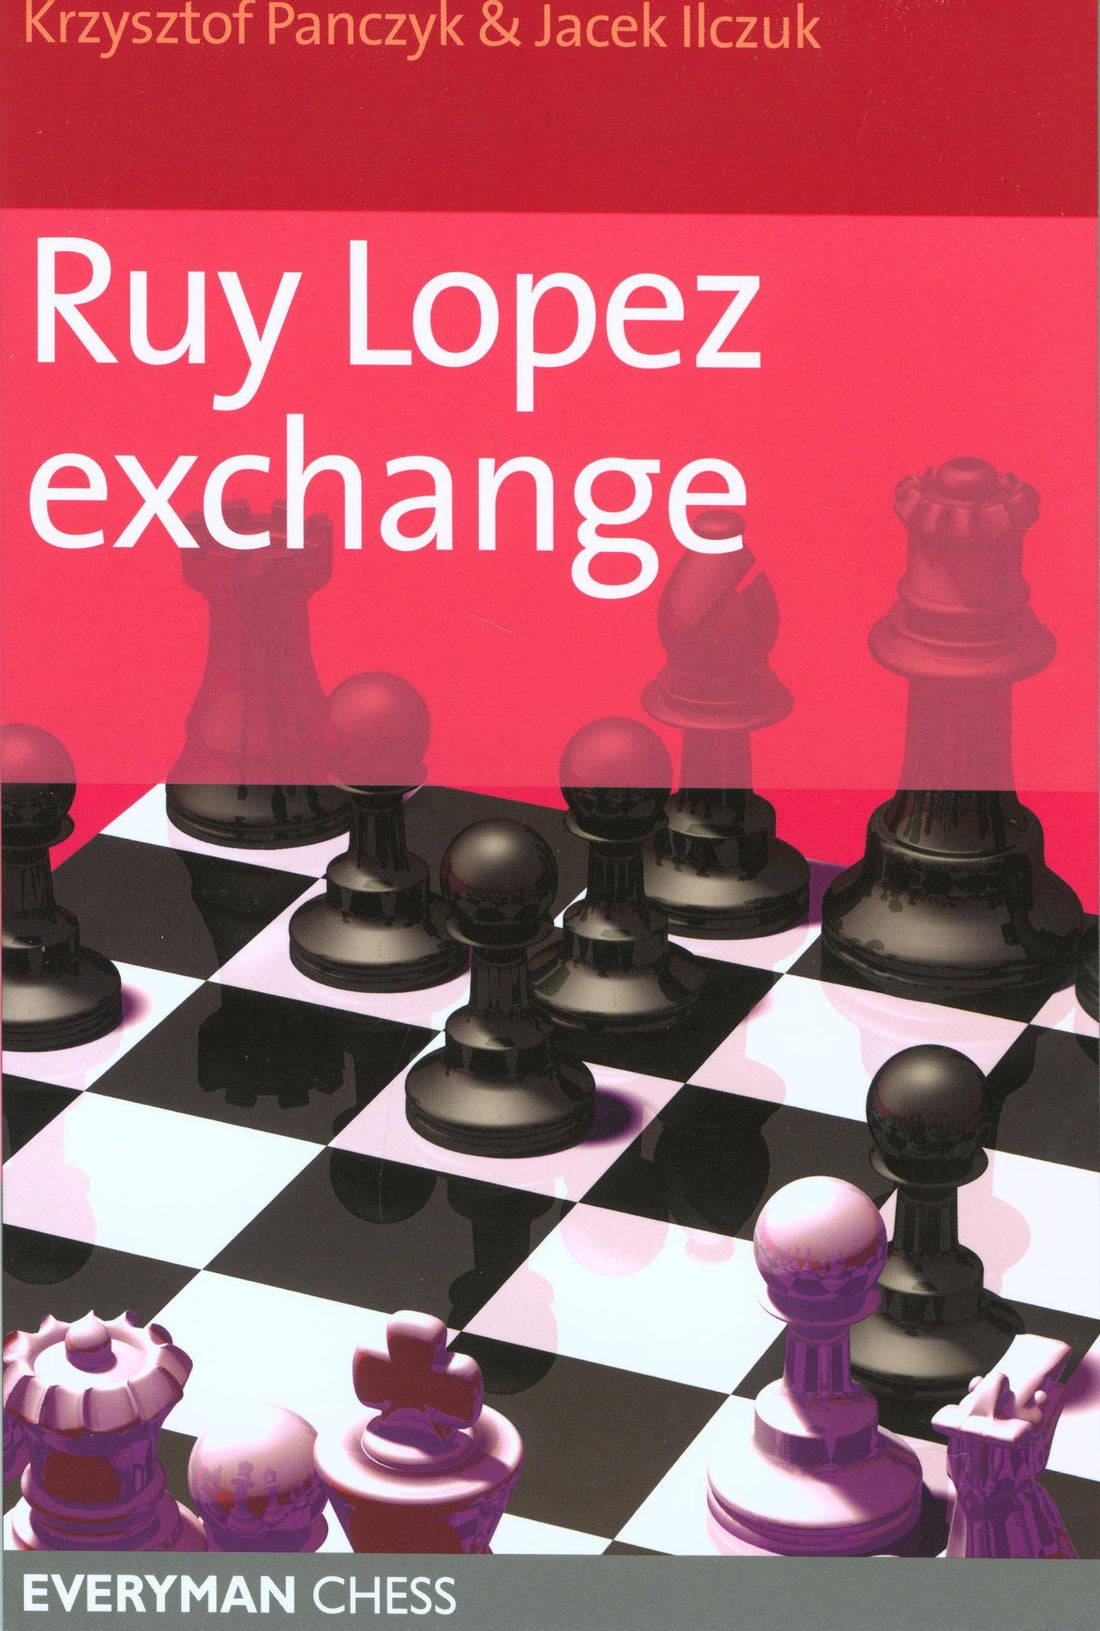 Chess Opening Basics: Ruy Lopez Exchange Variation - Chessable Blog